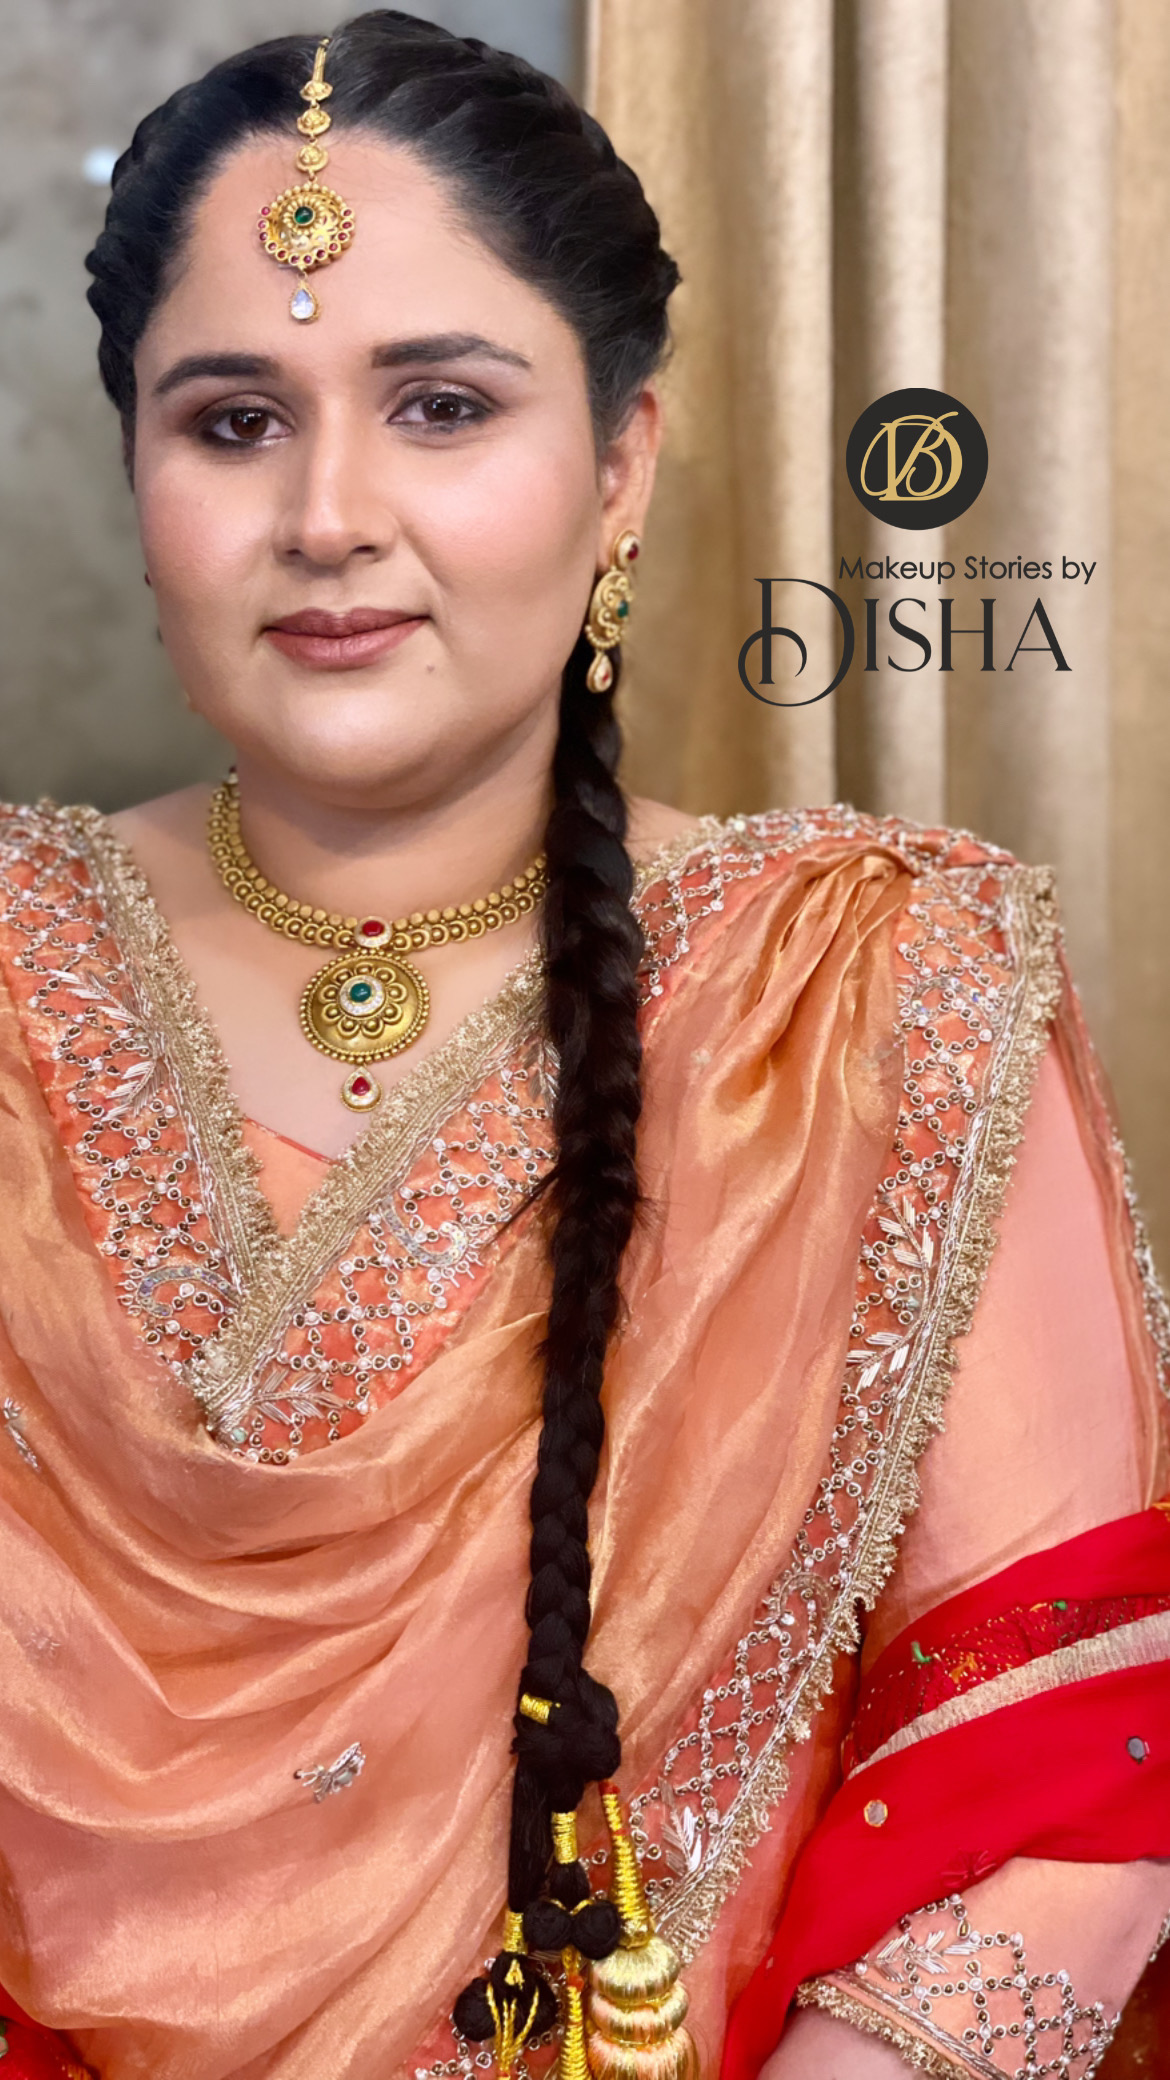 disha-batheja-makeup-artist-chandigarh